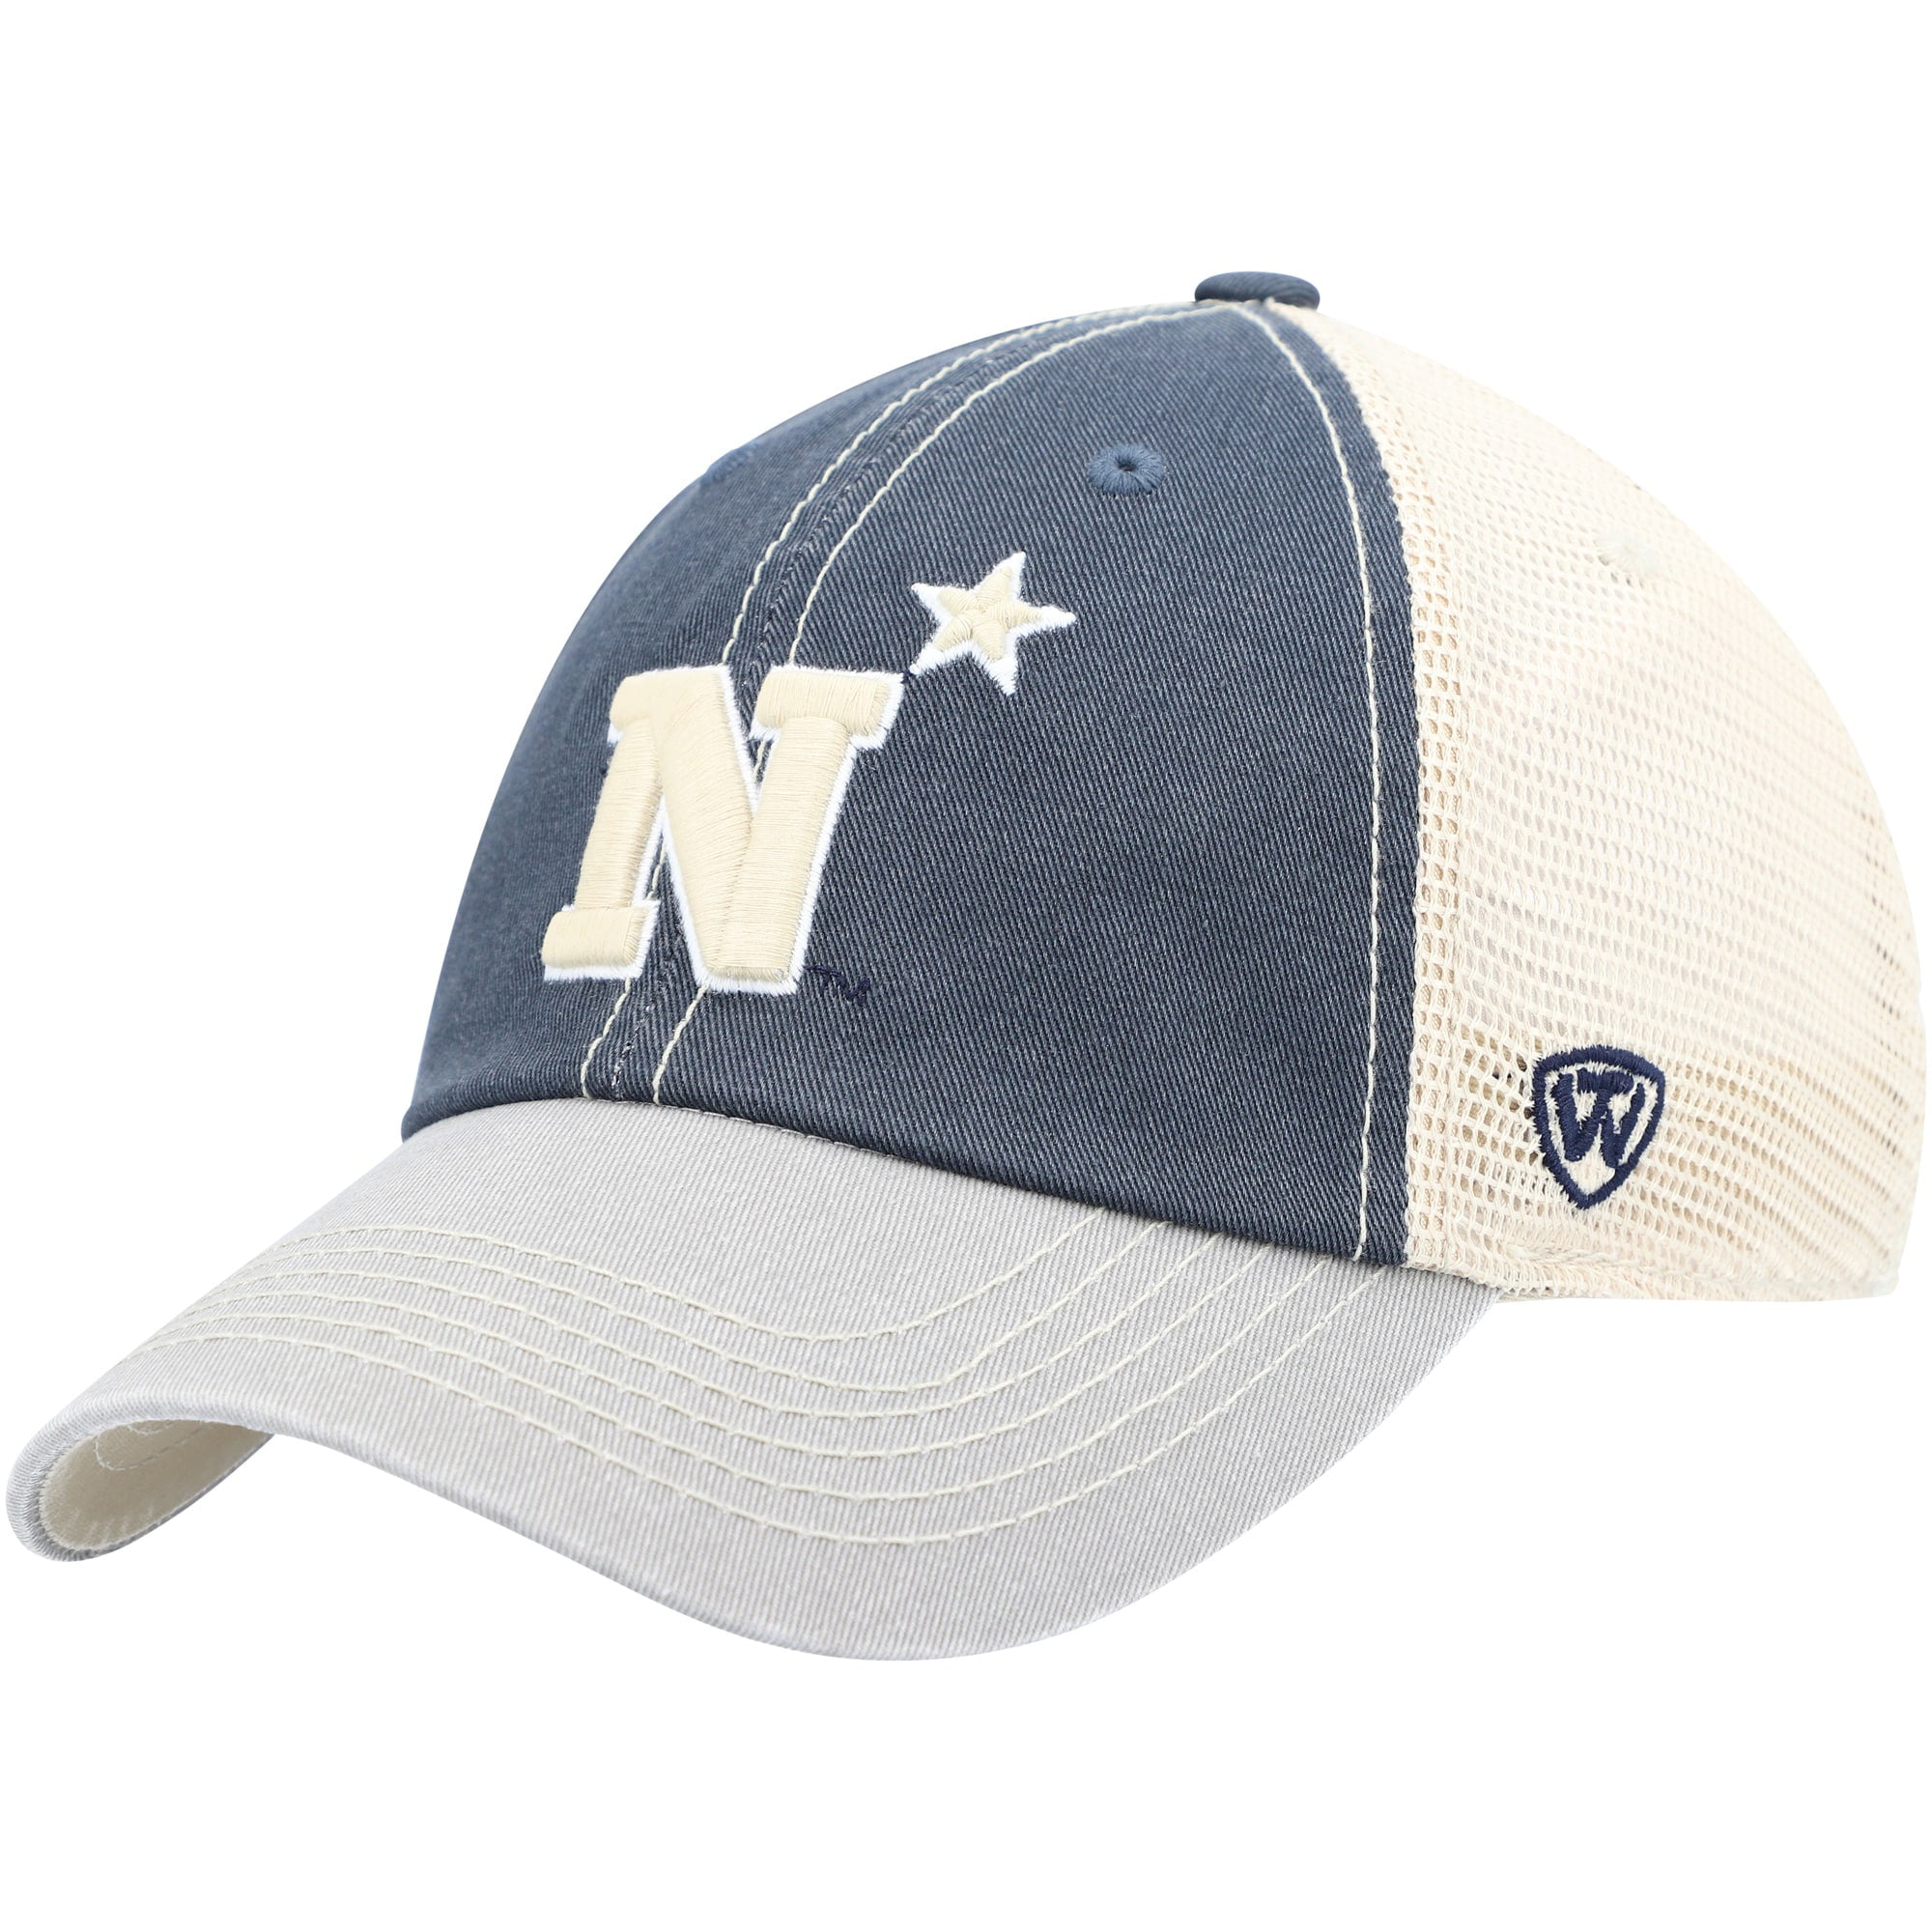 United States Naval Academy USNA Midshipmen Flat Bill Snapback Baseball Cap Hat 